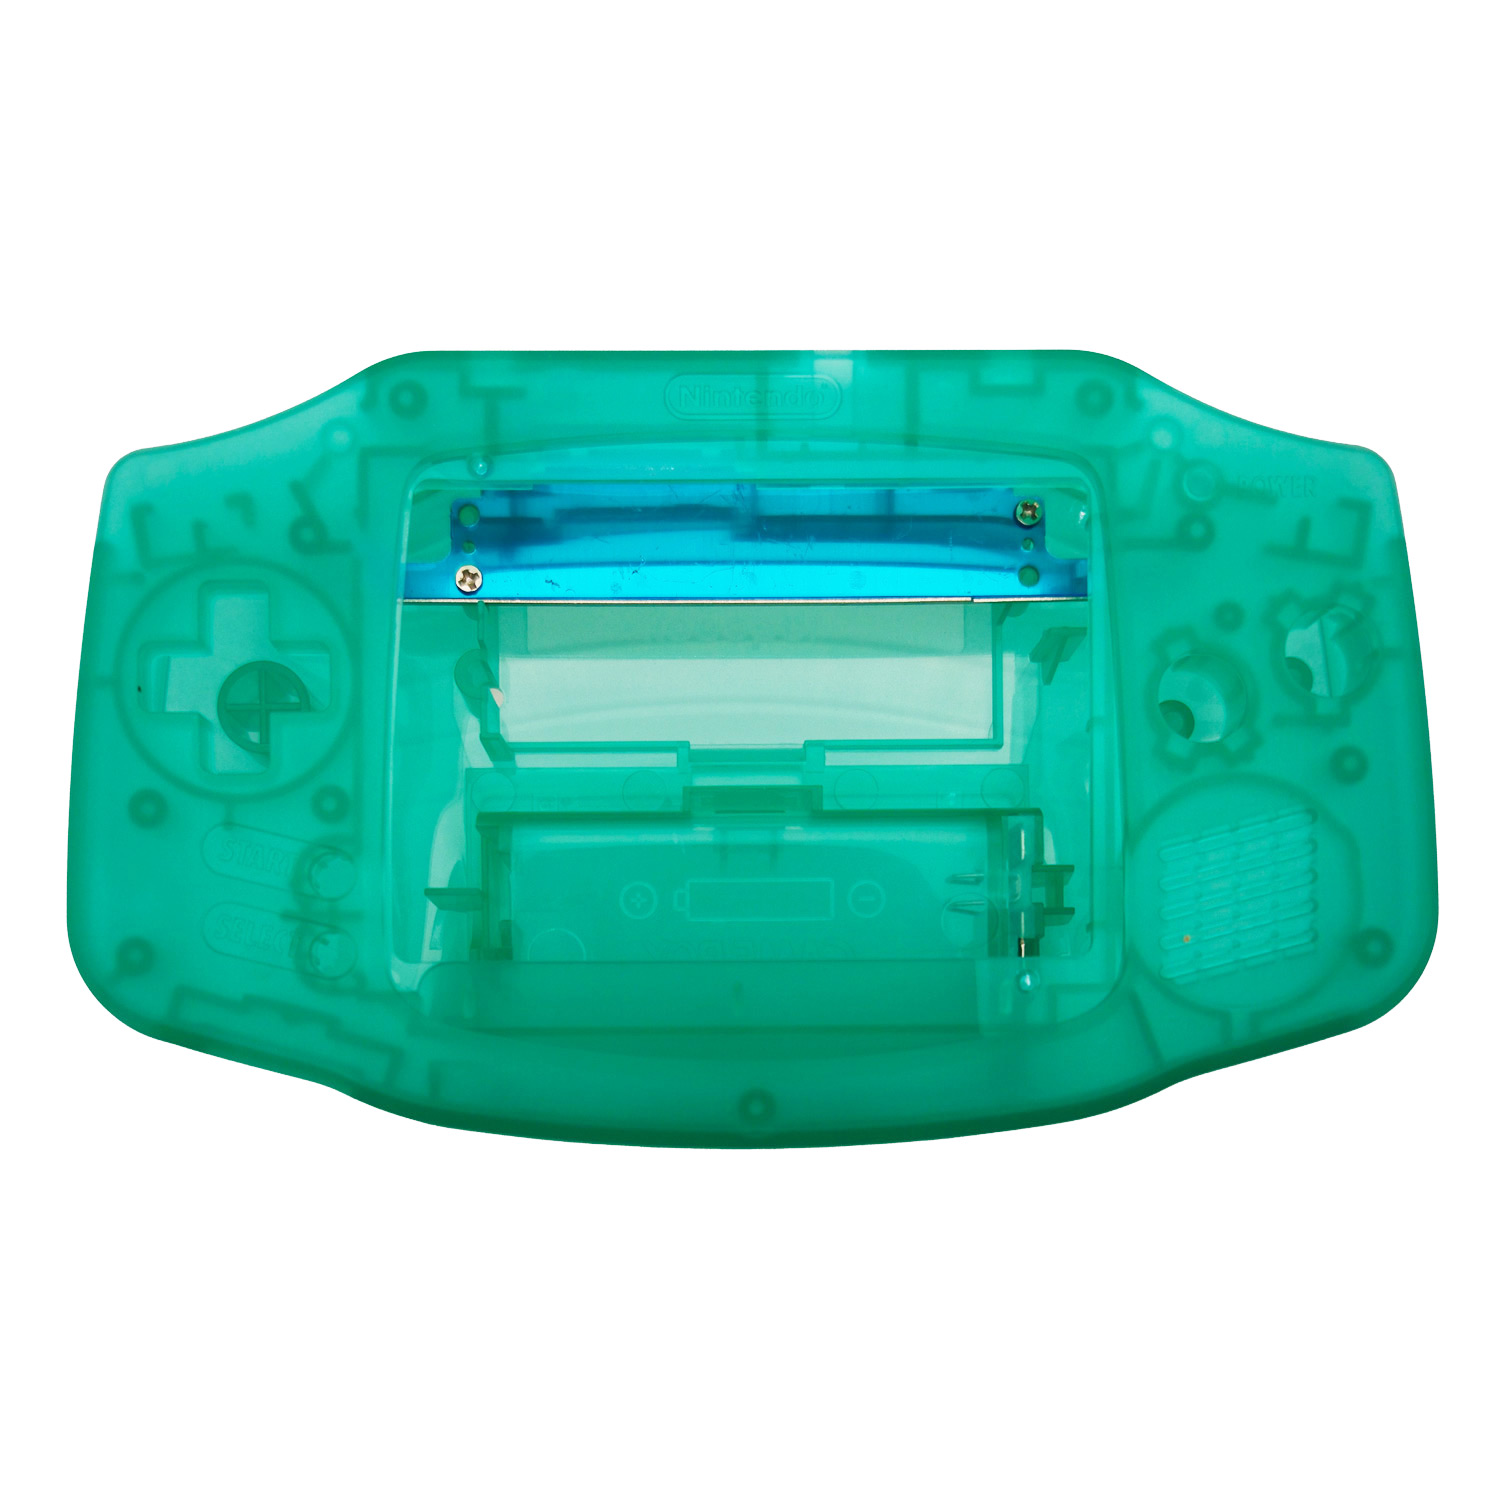 Game Boy Advance Etui (Transparant Mint)